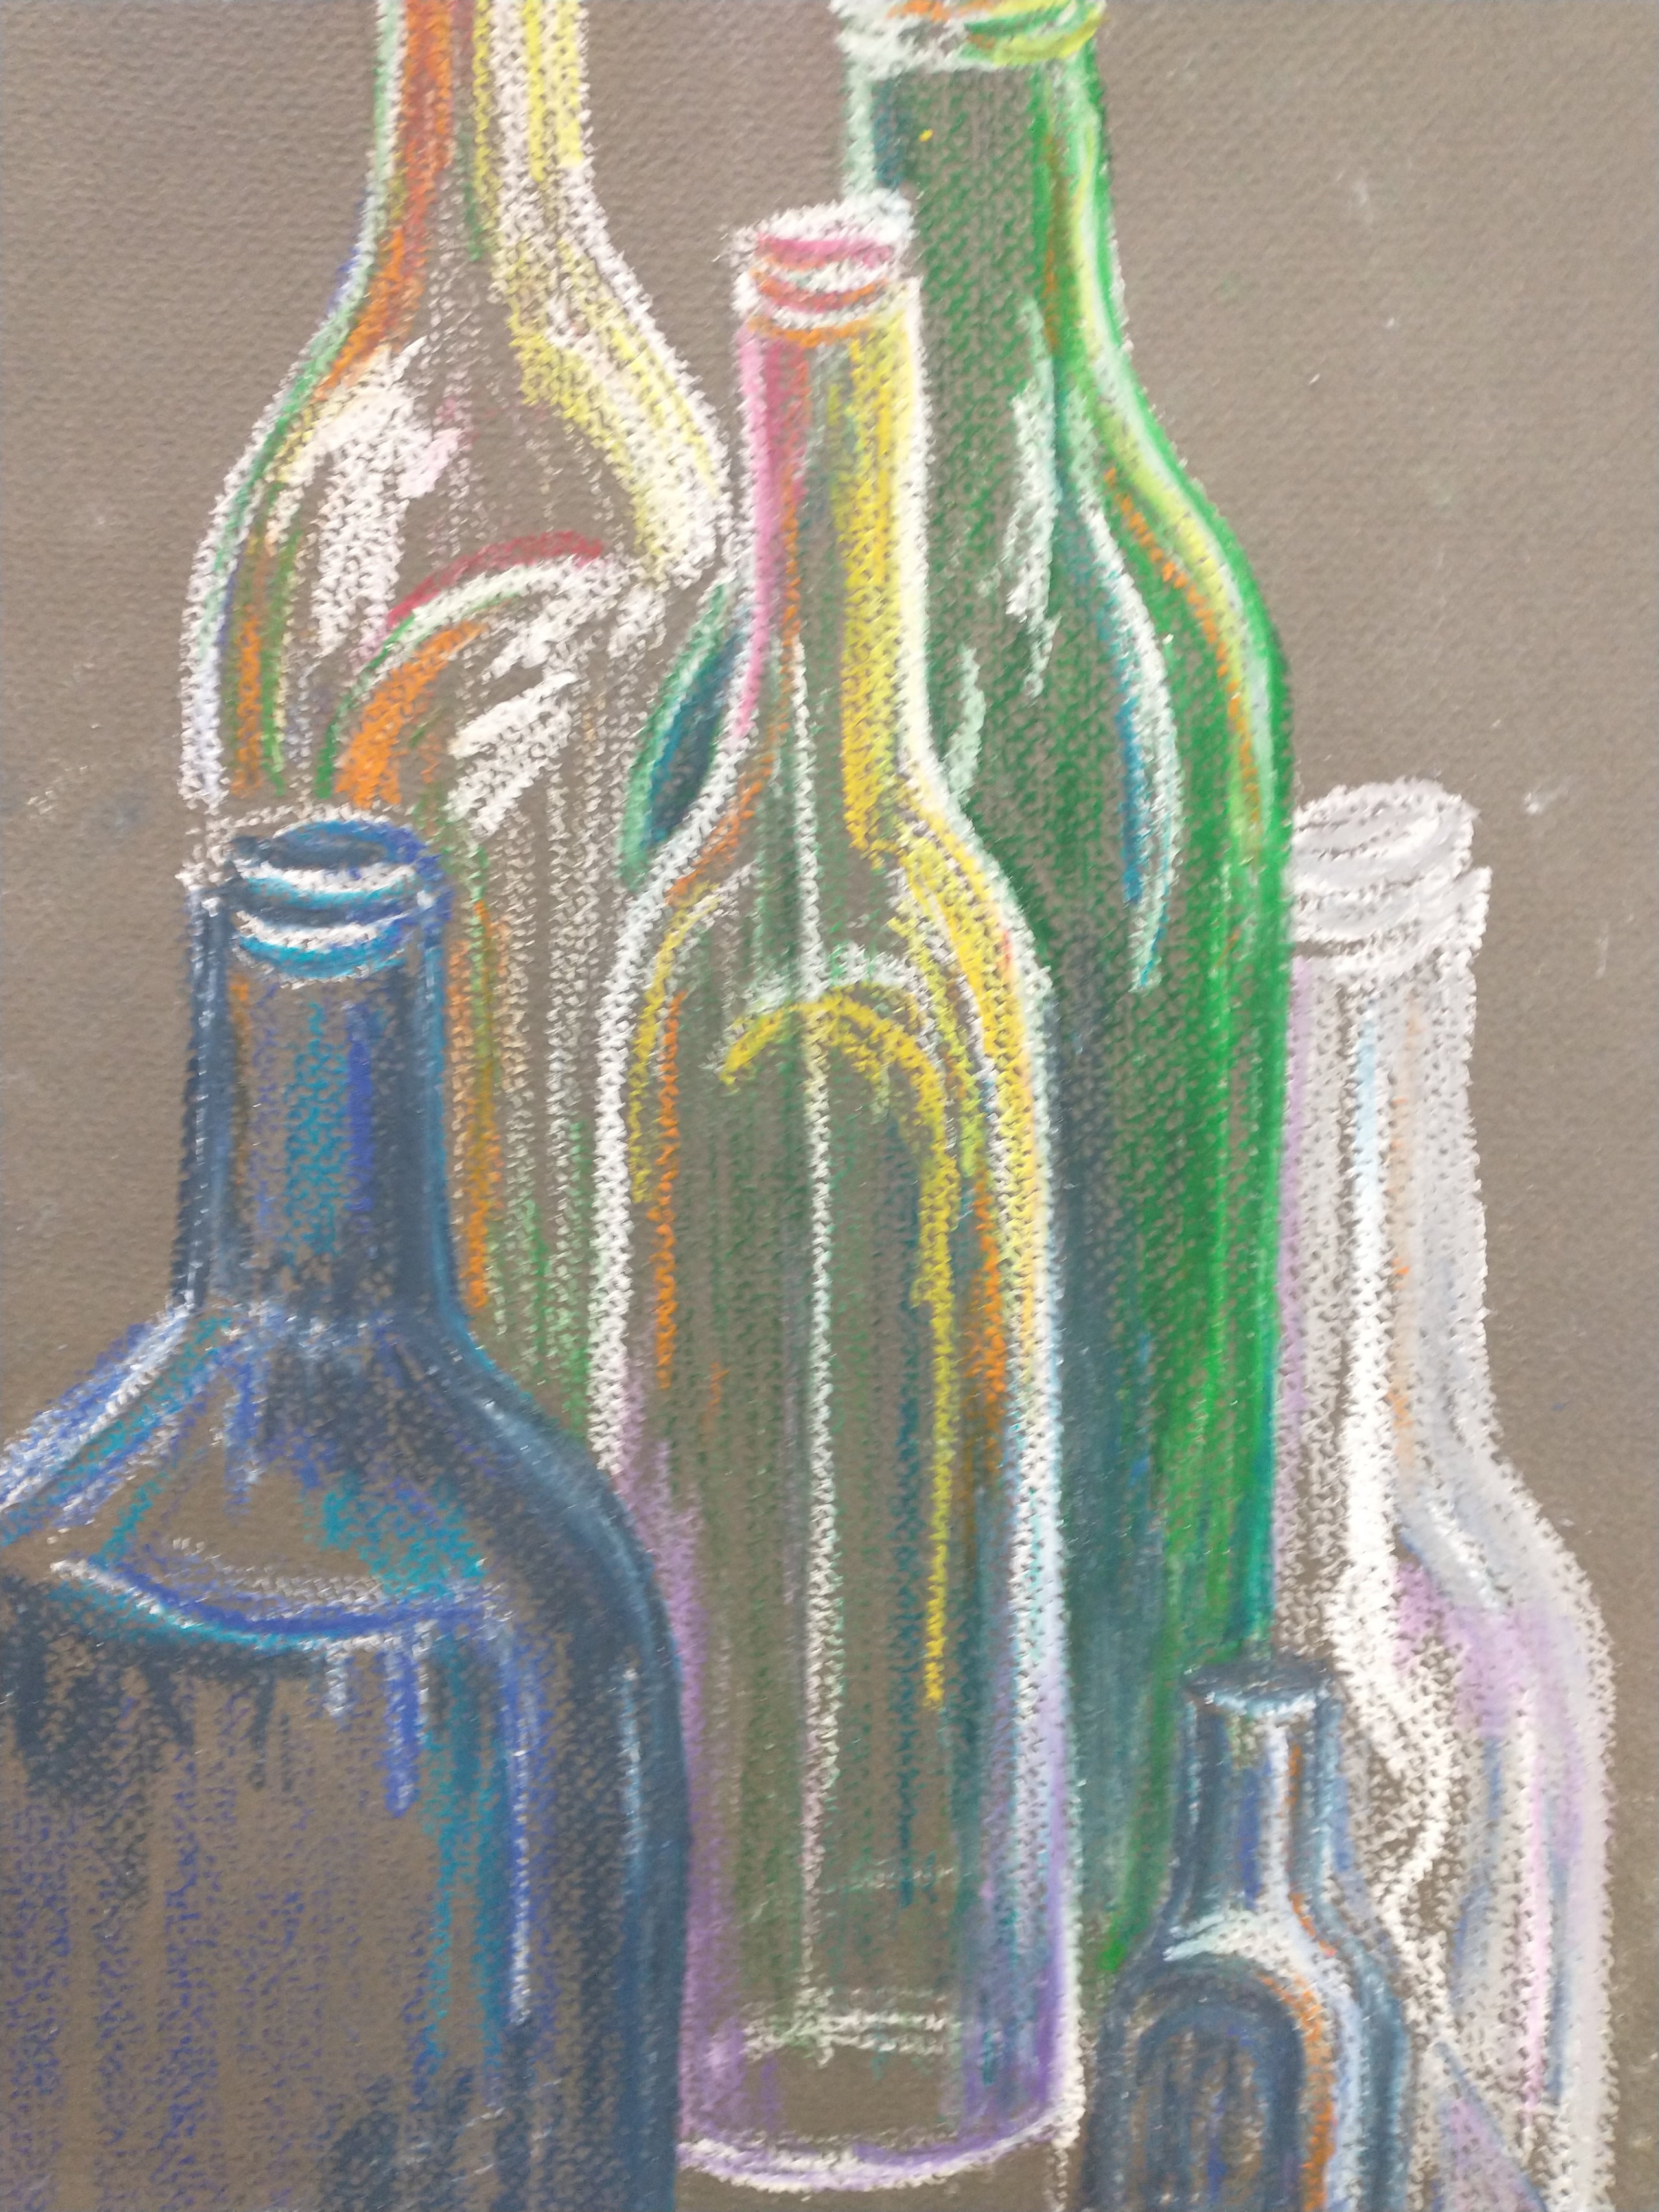 Chalk Pastel Bottle Still Life with Nancy Nelson Brotz January